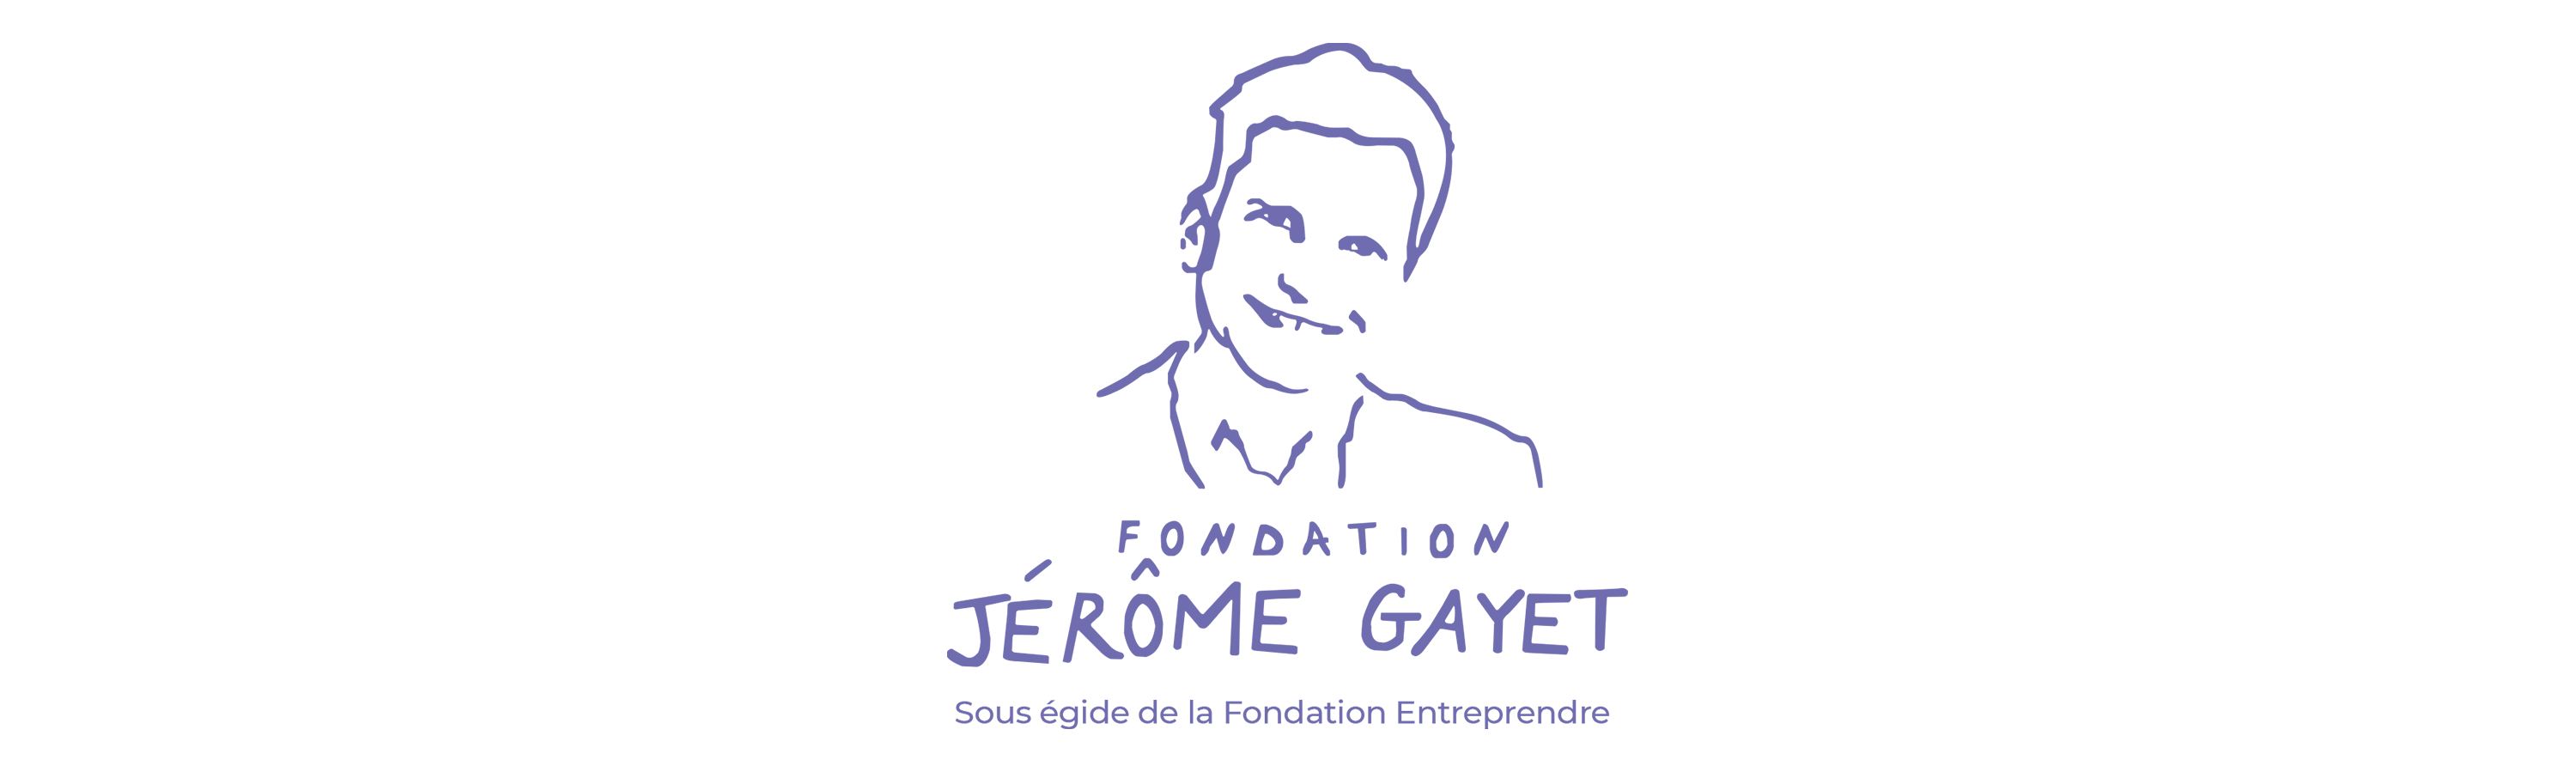 Bannière Jerome Gayet_VF.png